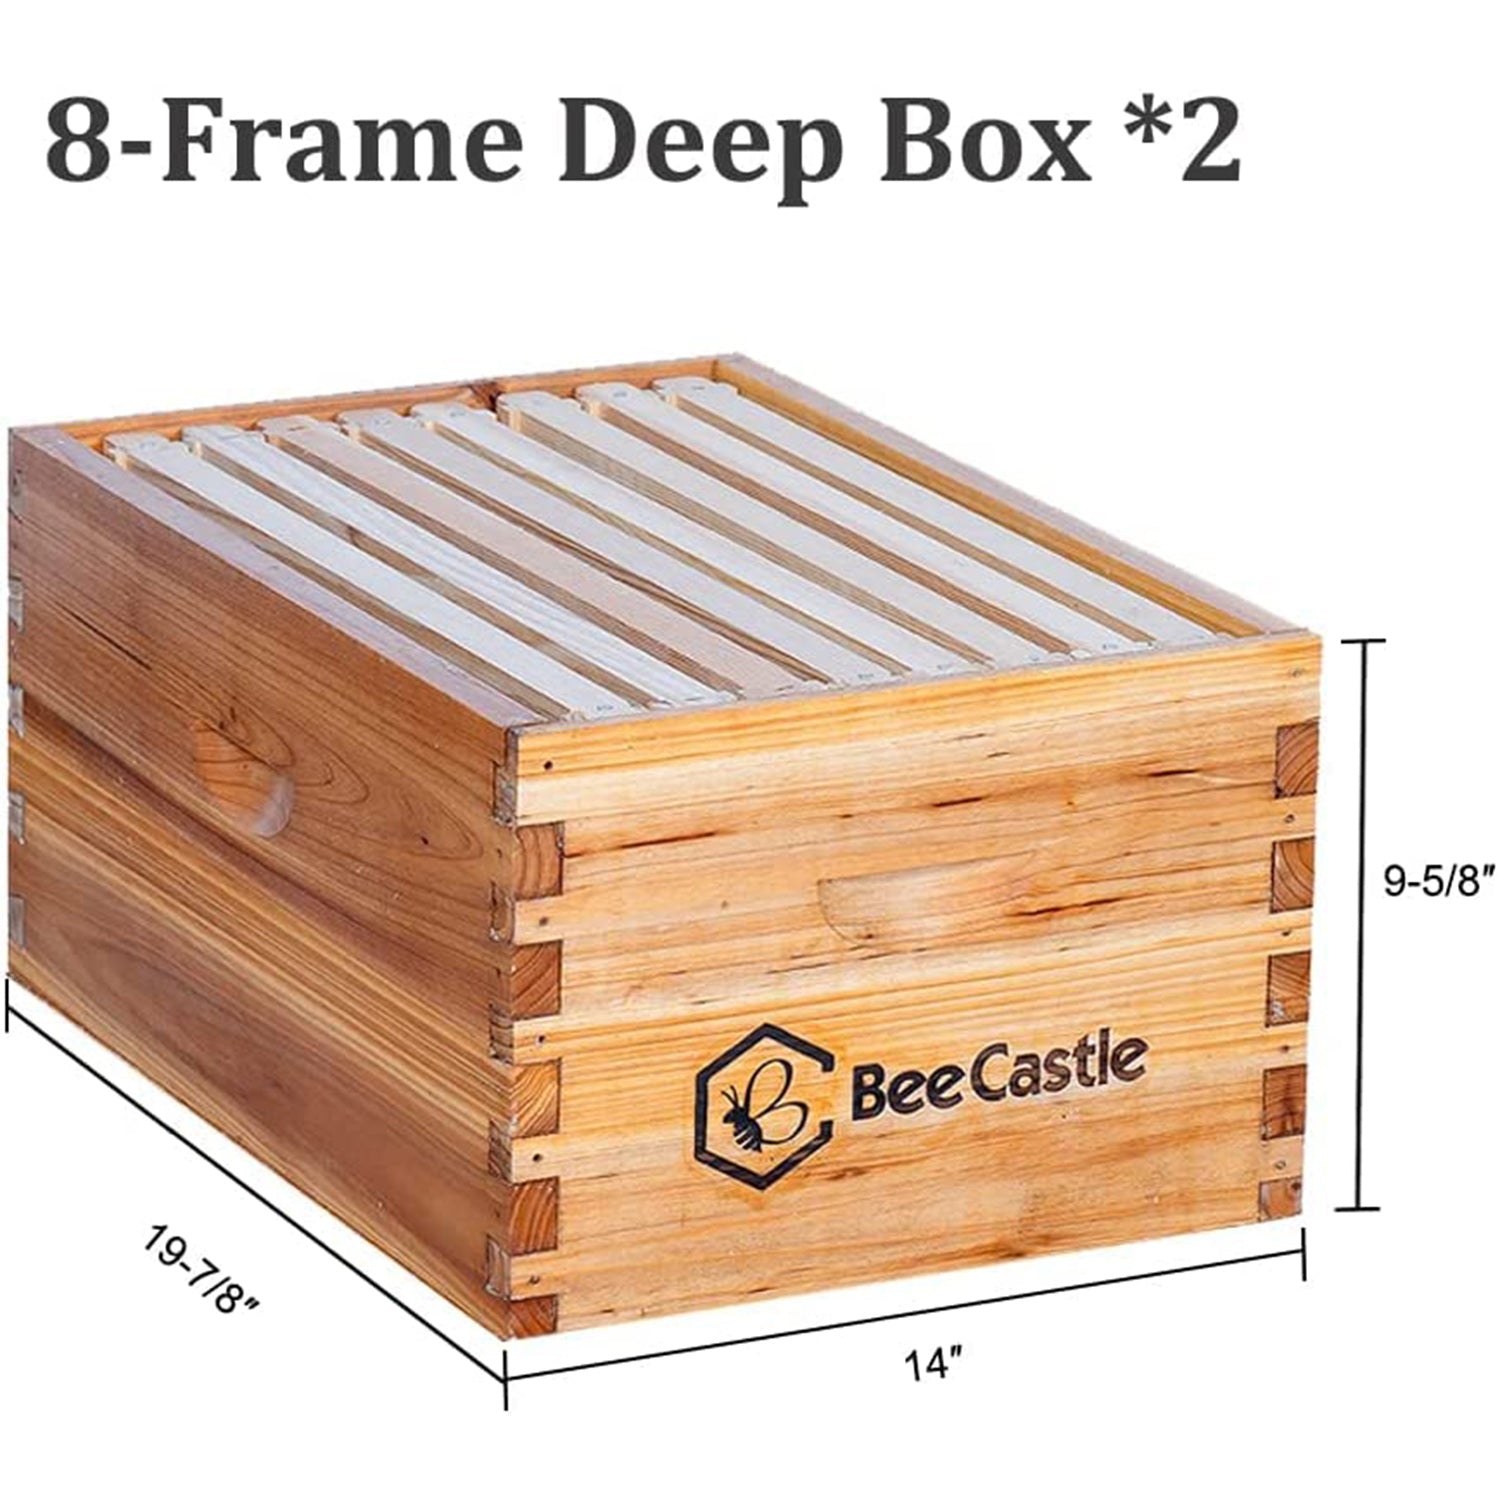 8-frame deep box measures